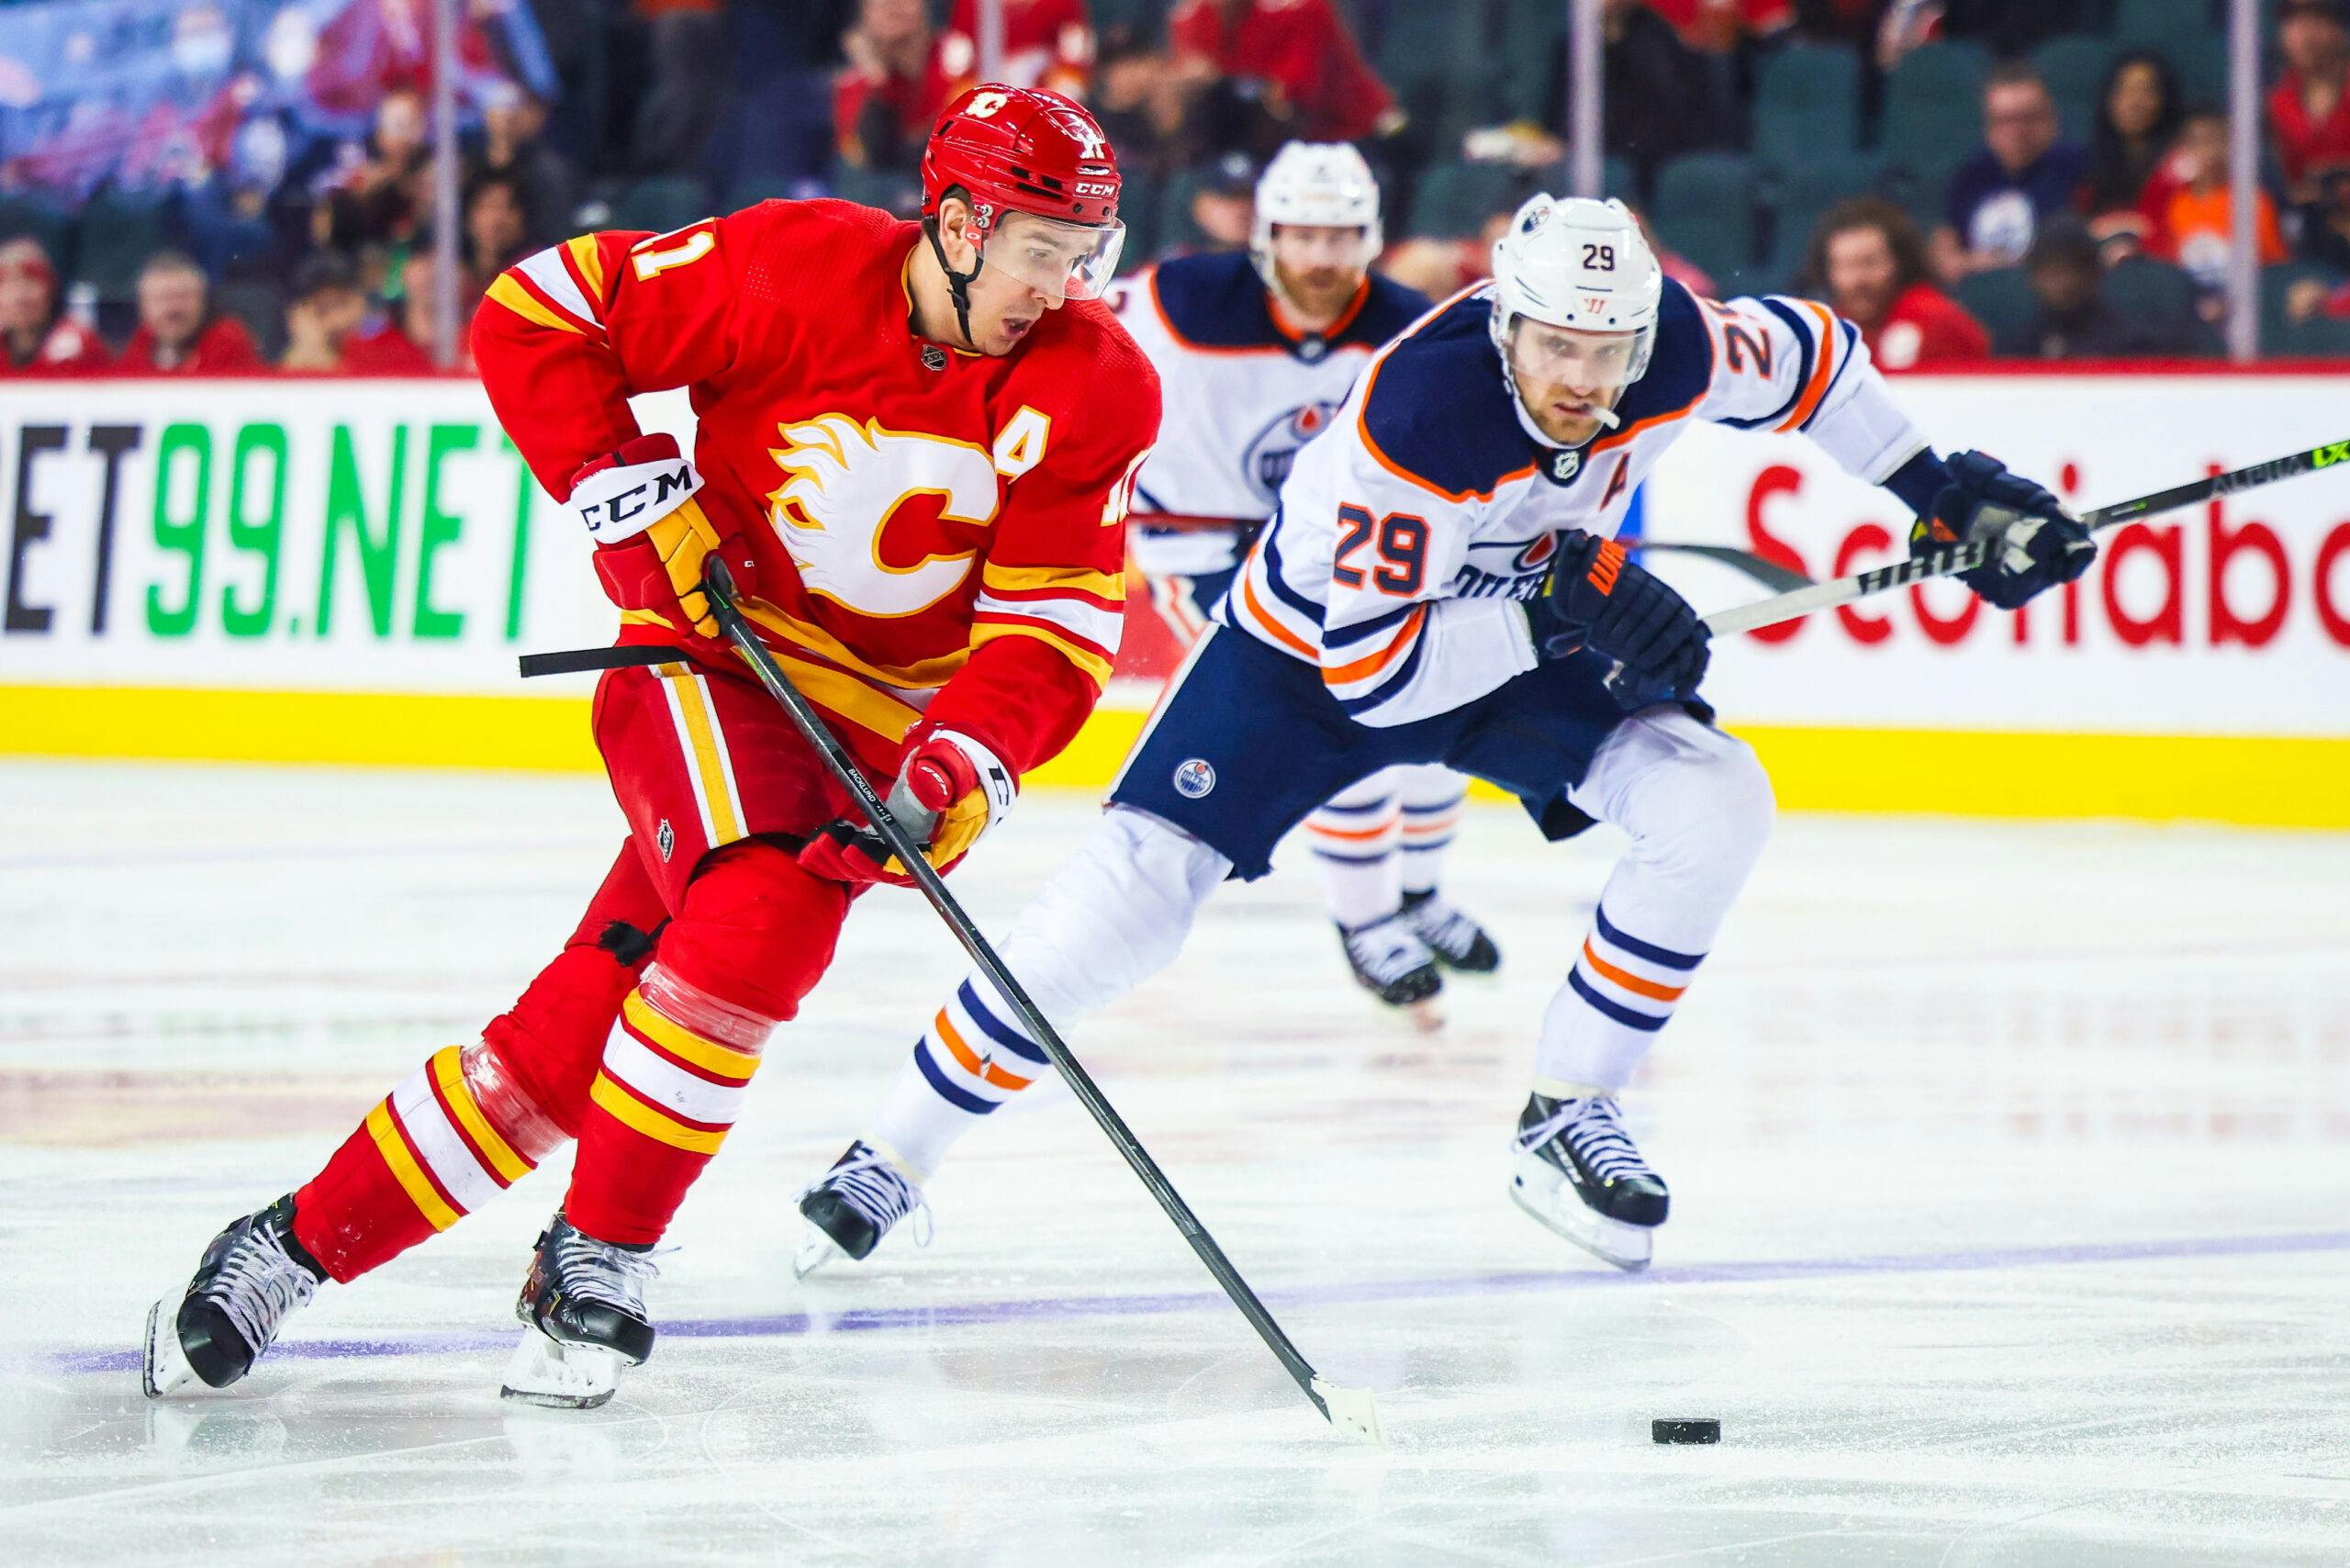 Report: Nazem Kadri signs long-term deal with Calgary Flames after